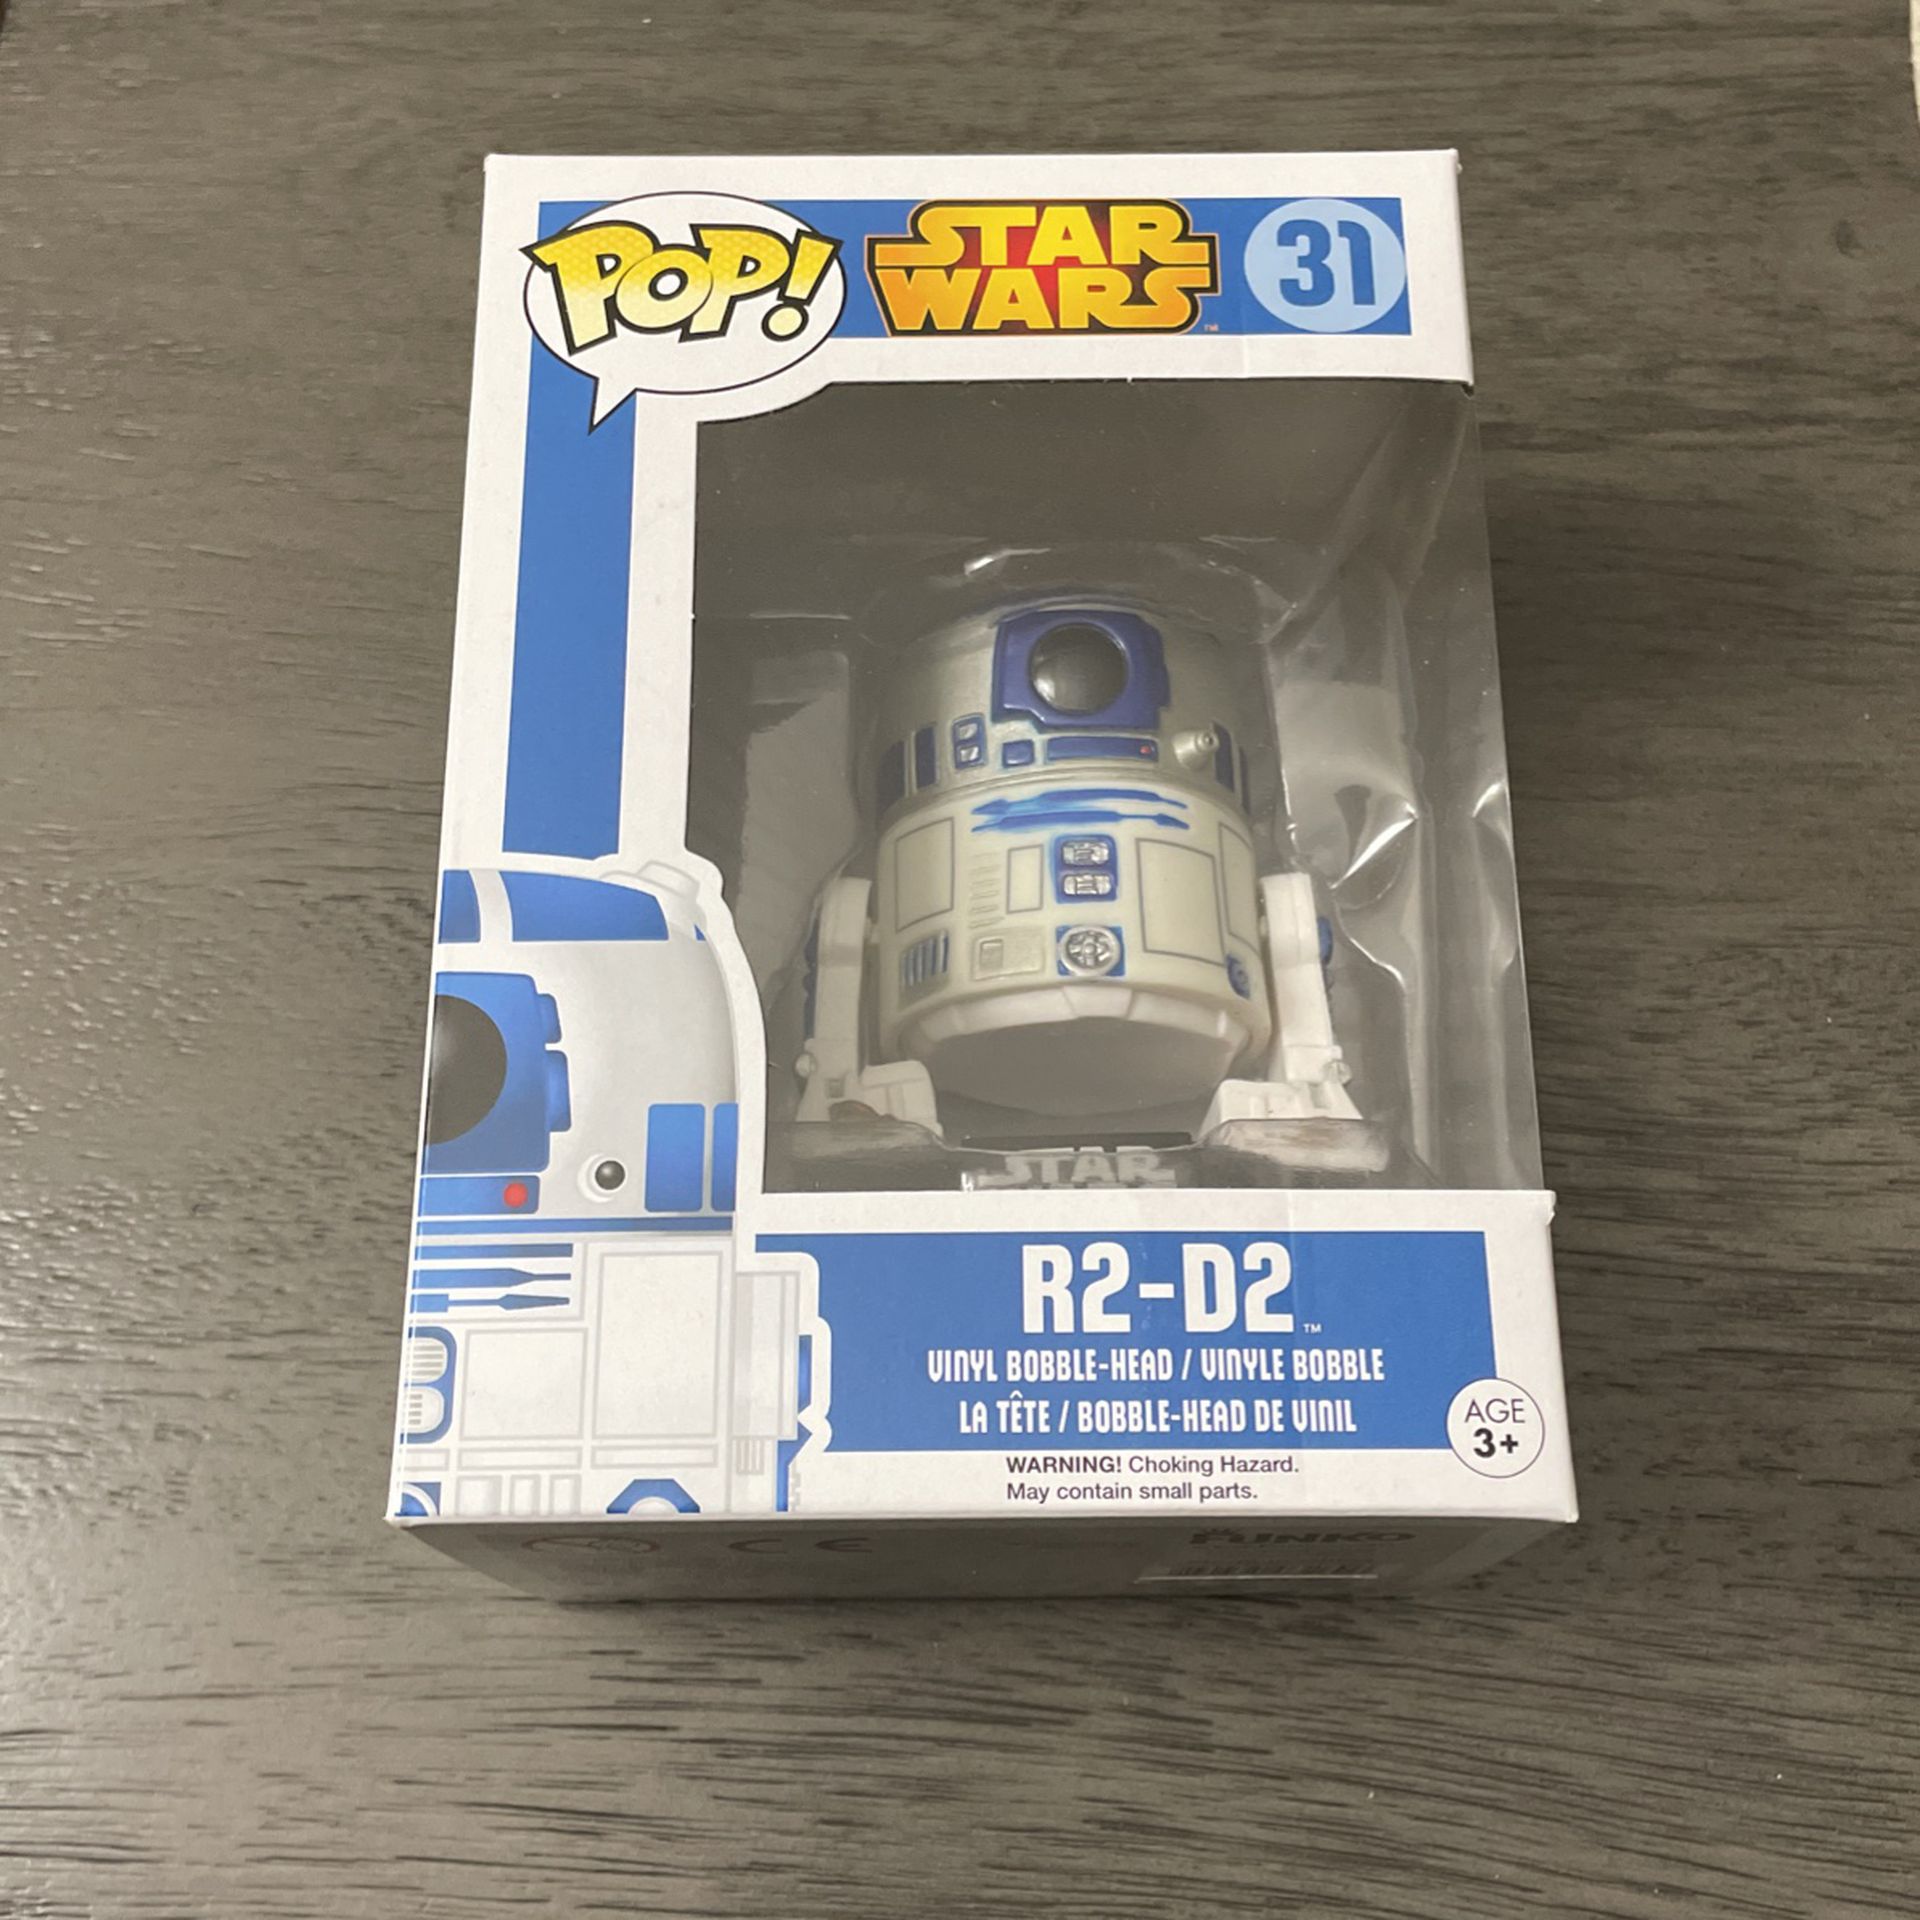 New Sealed Funko POP #31 Star Wars: R2-D2 Bobble Figure Blue Label